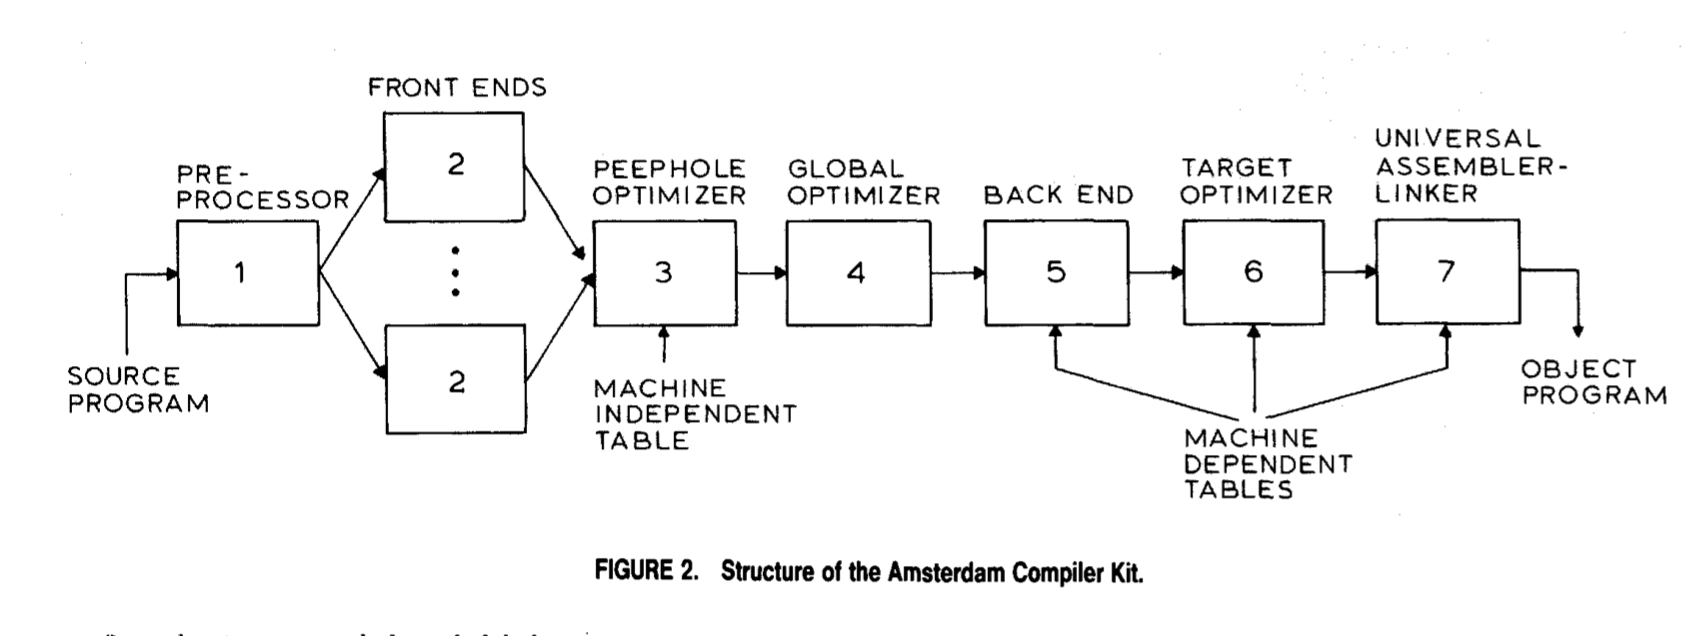 Amsterdam compiler kit.png